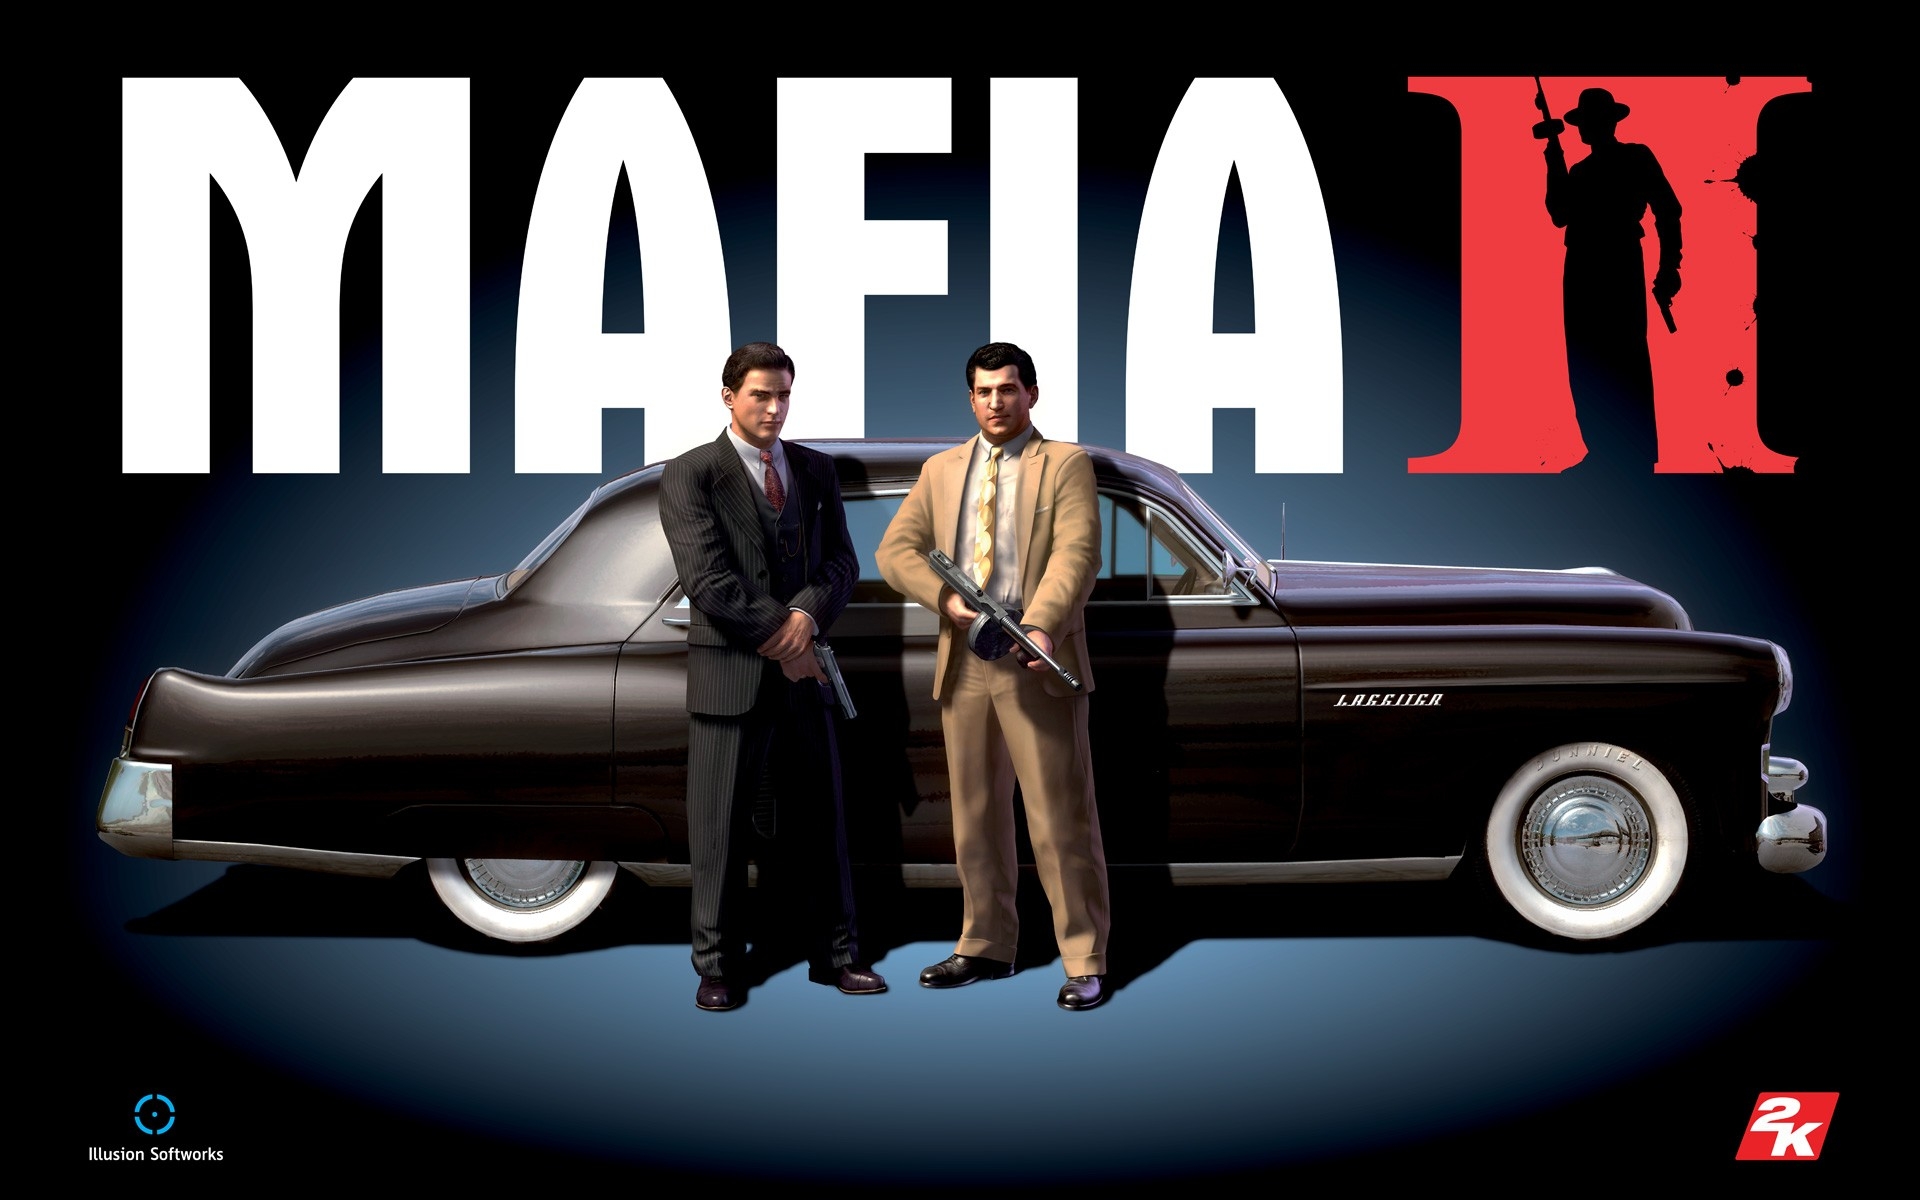 mafia 2, car, gun Wallpaper, HD Games 4K Wallpapers, Images, Photos and  Background - Wallpapers Den